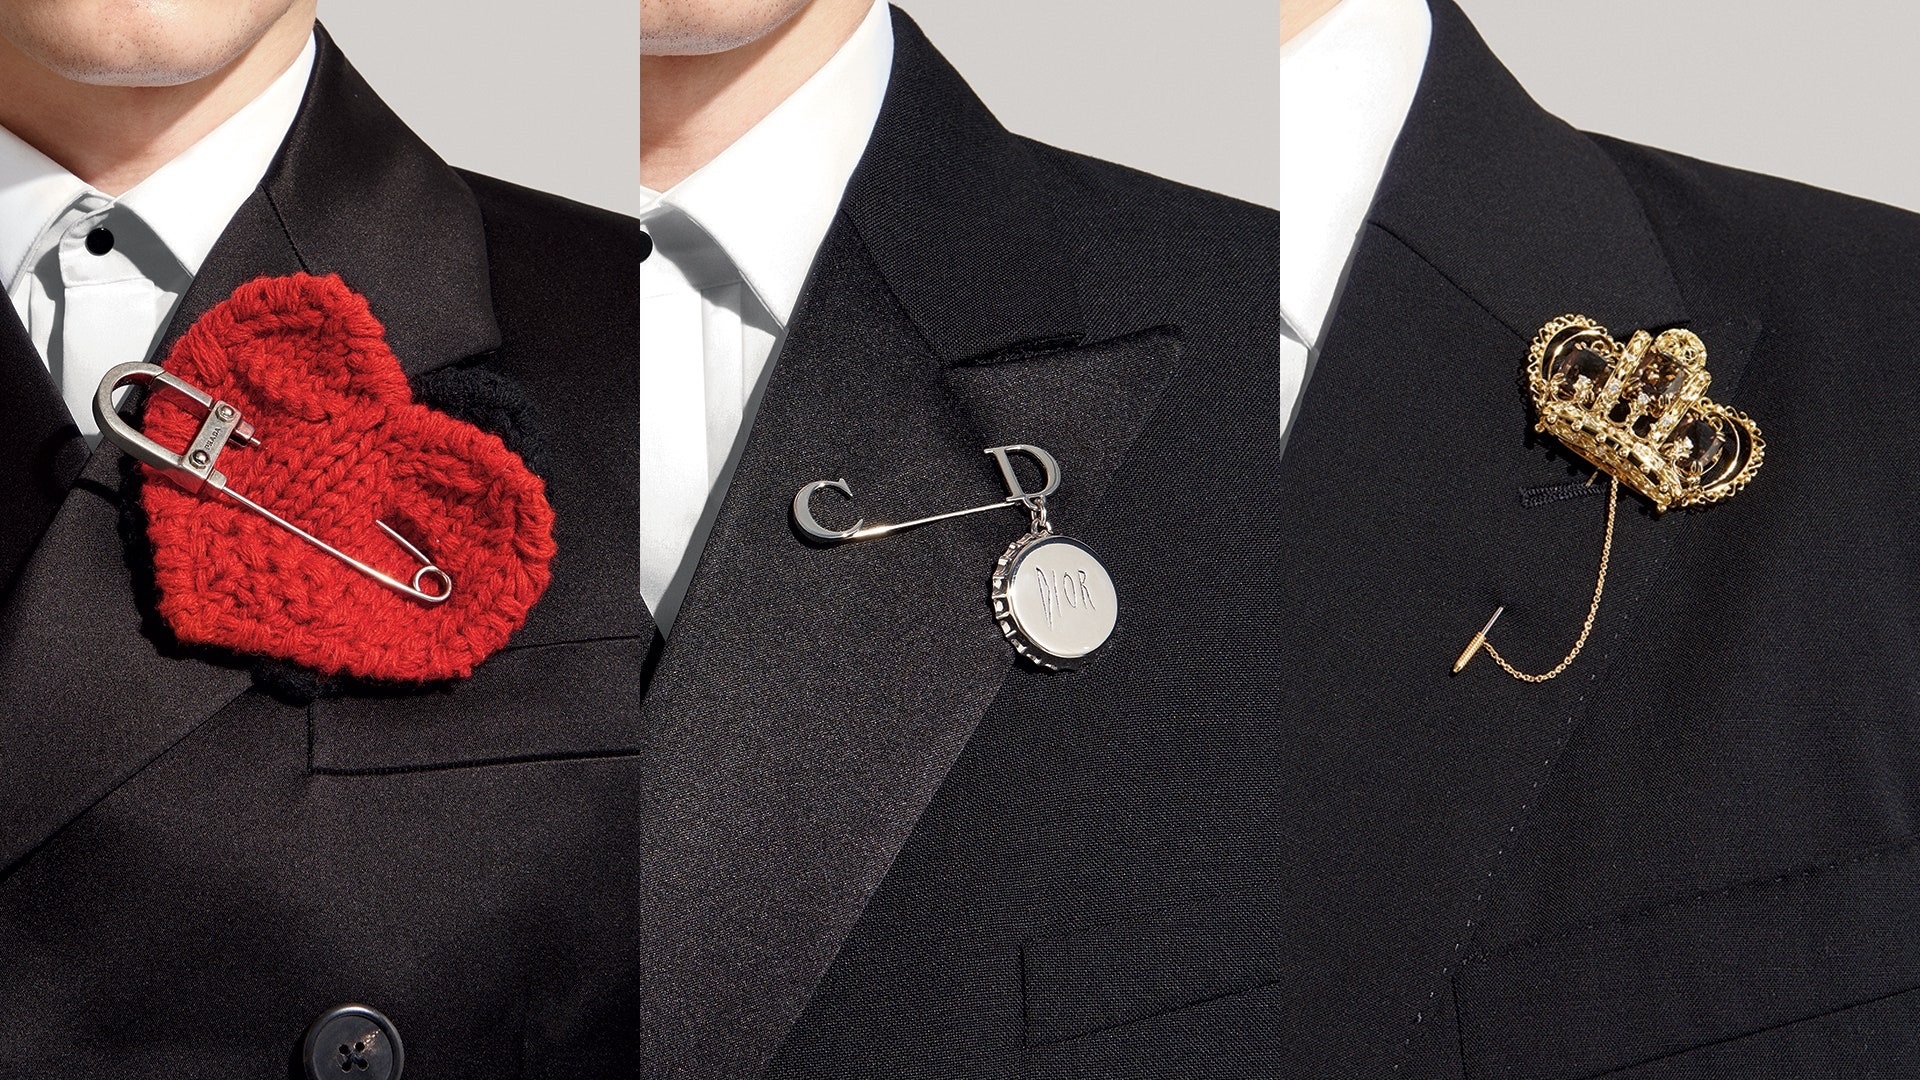 Men's lapel pins, Stylish accessories, British fashion, Gentleman's attire, 1920x1080 Full HD Desktop